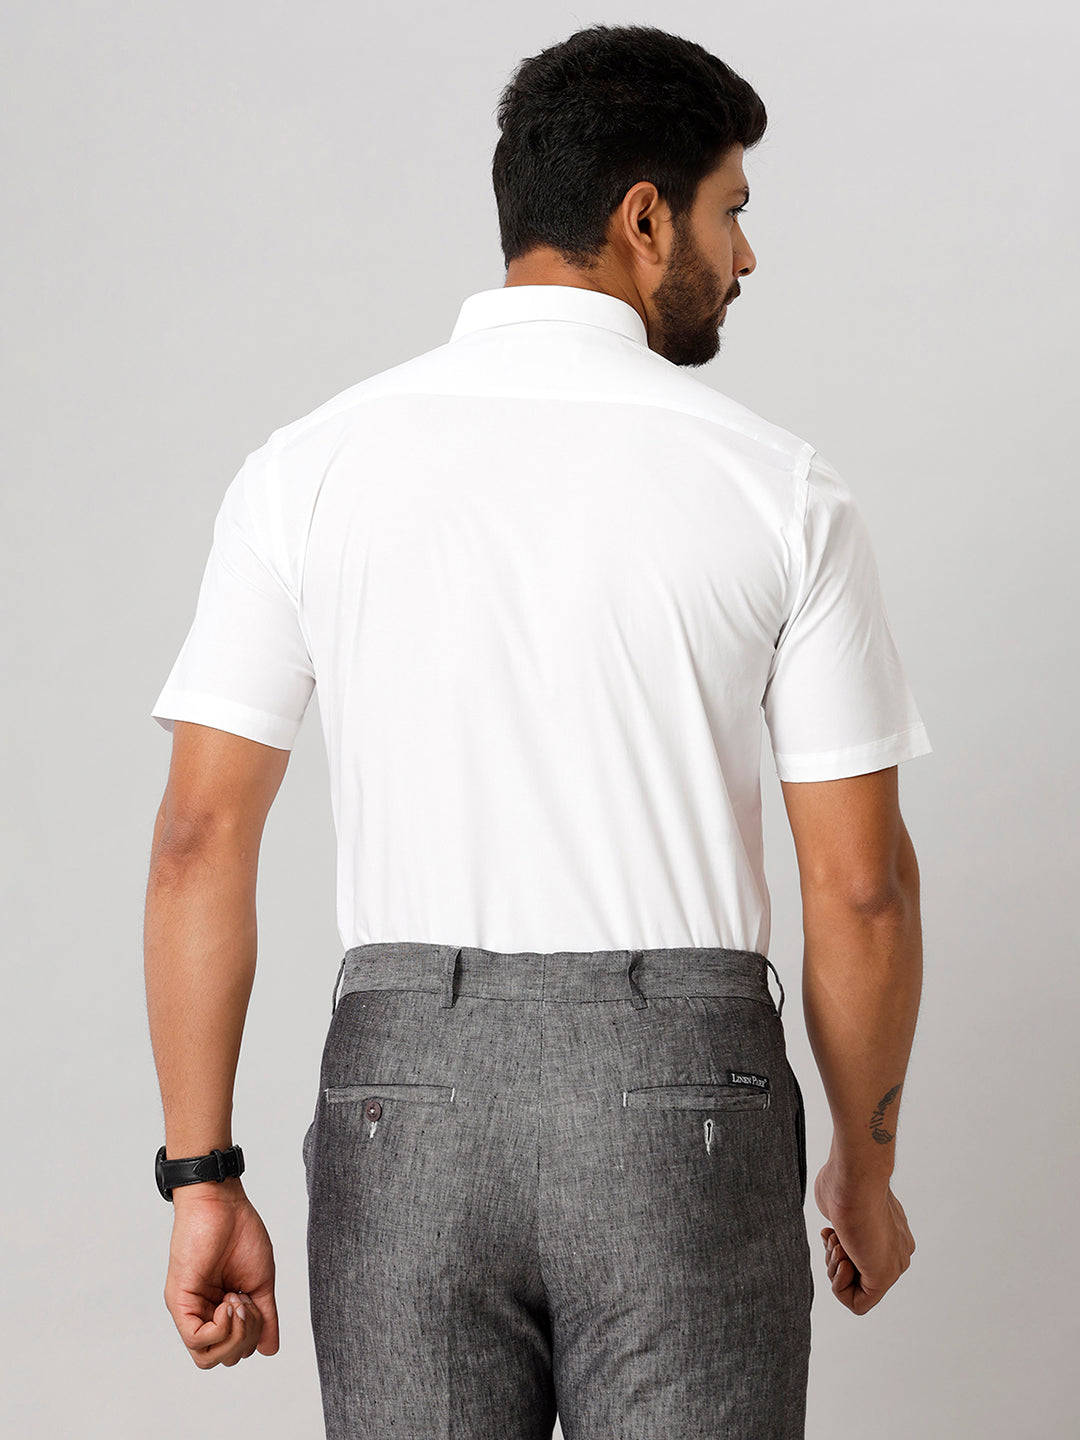 Mens Cotton Smart Fit White Half Sleeves Shirt Trendy -Baxk view